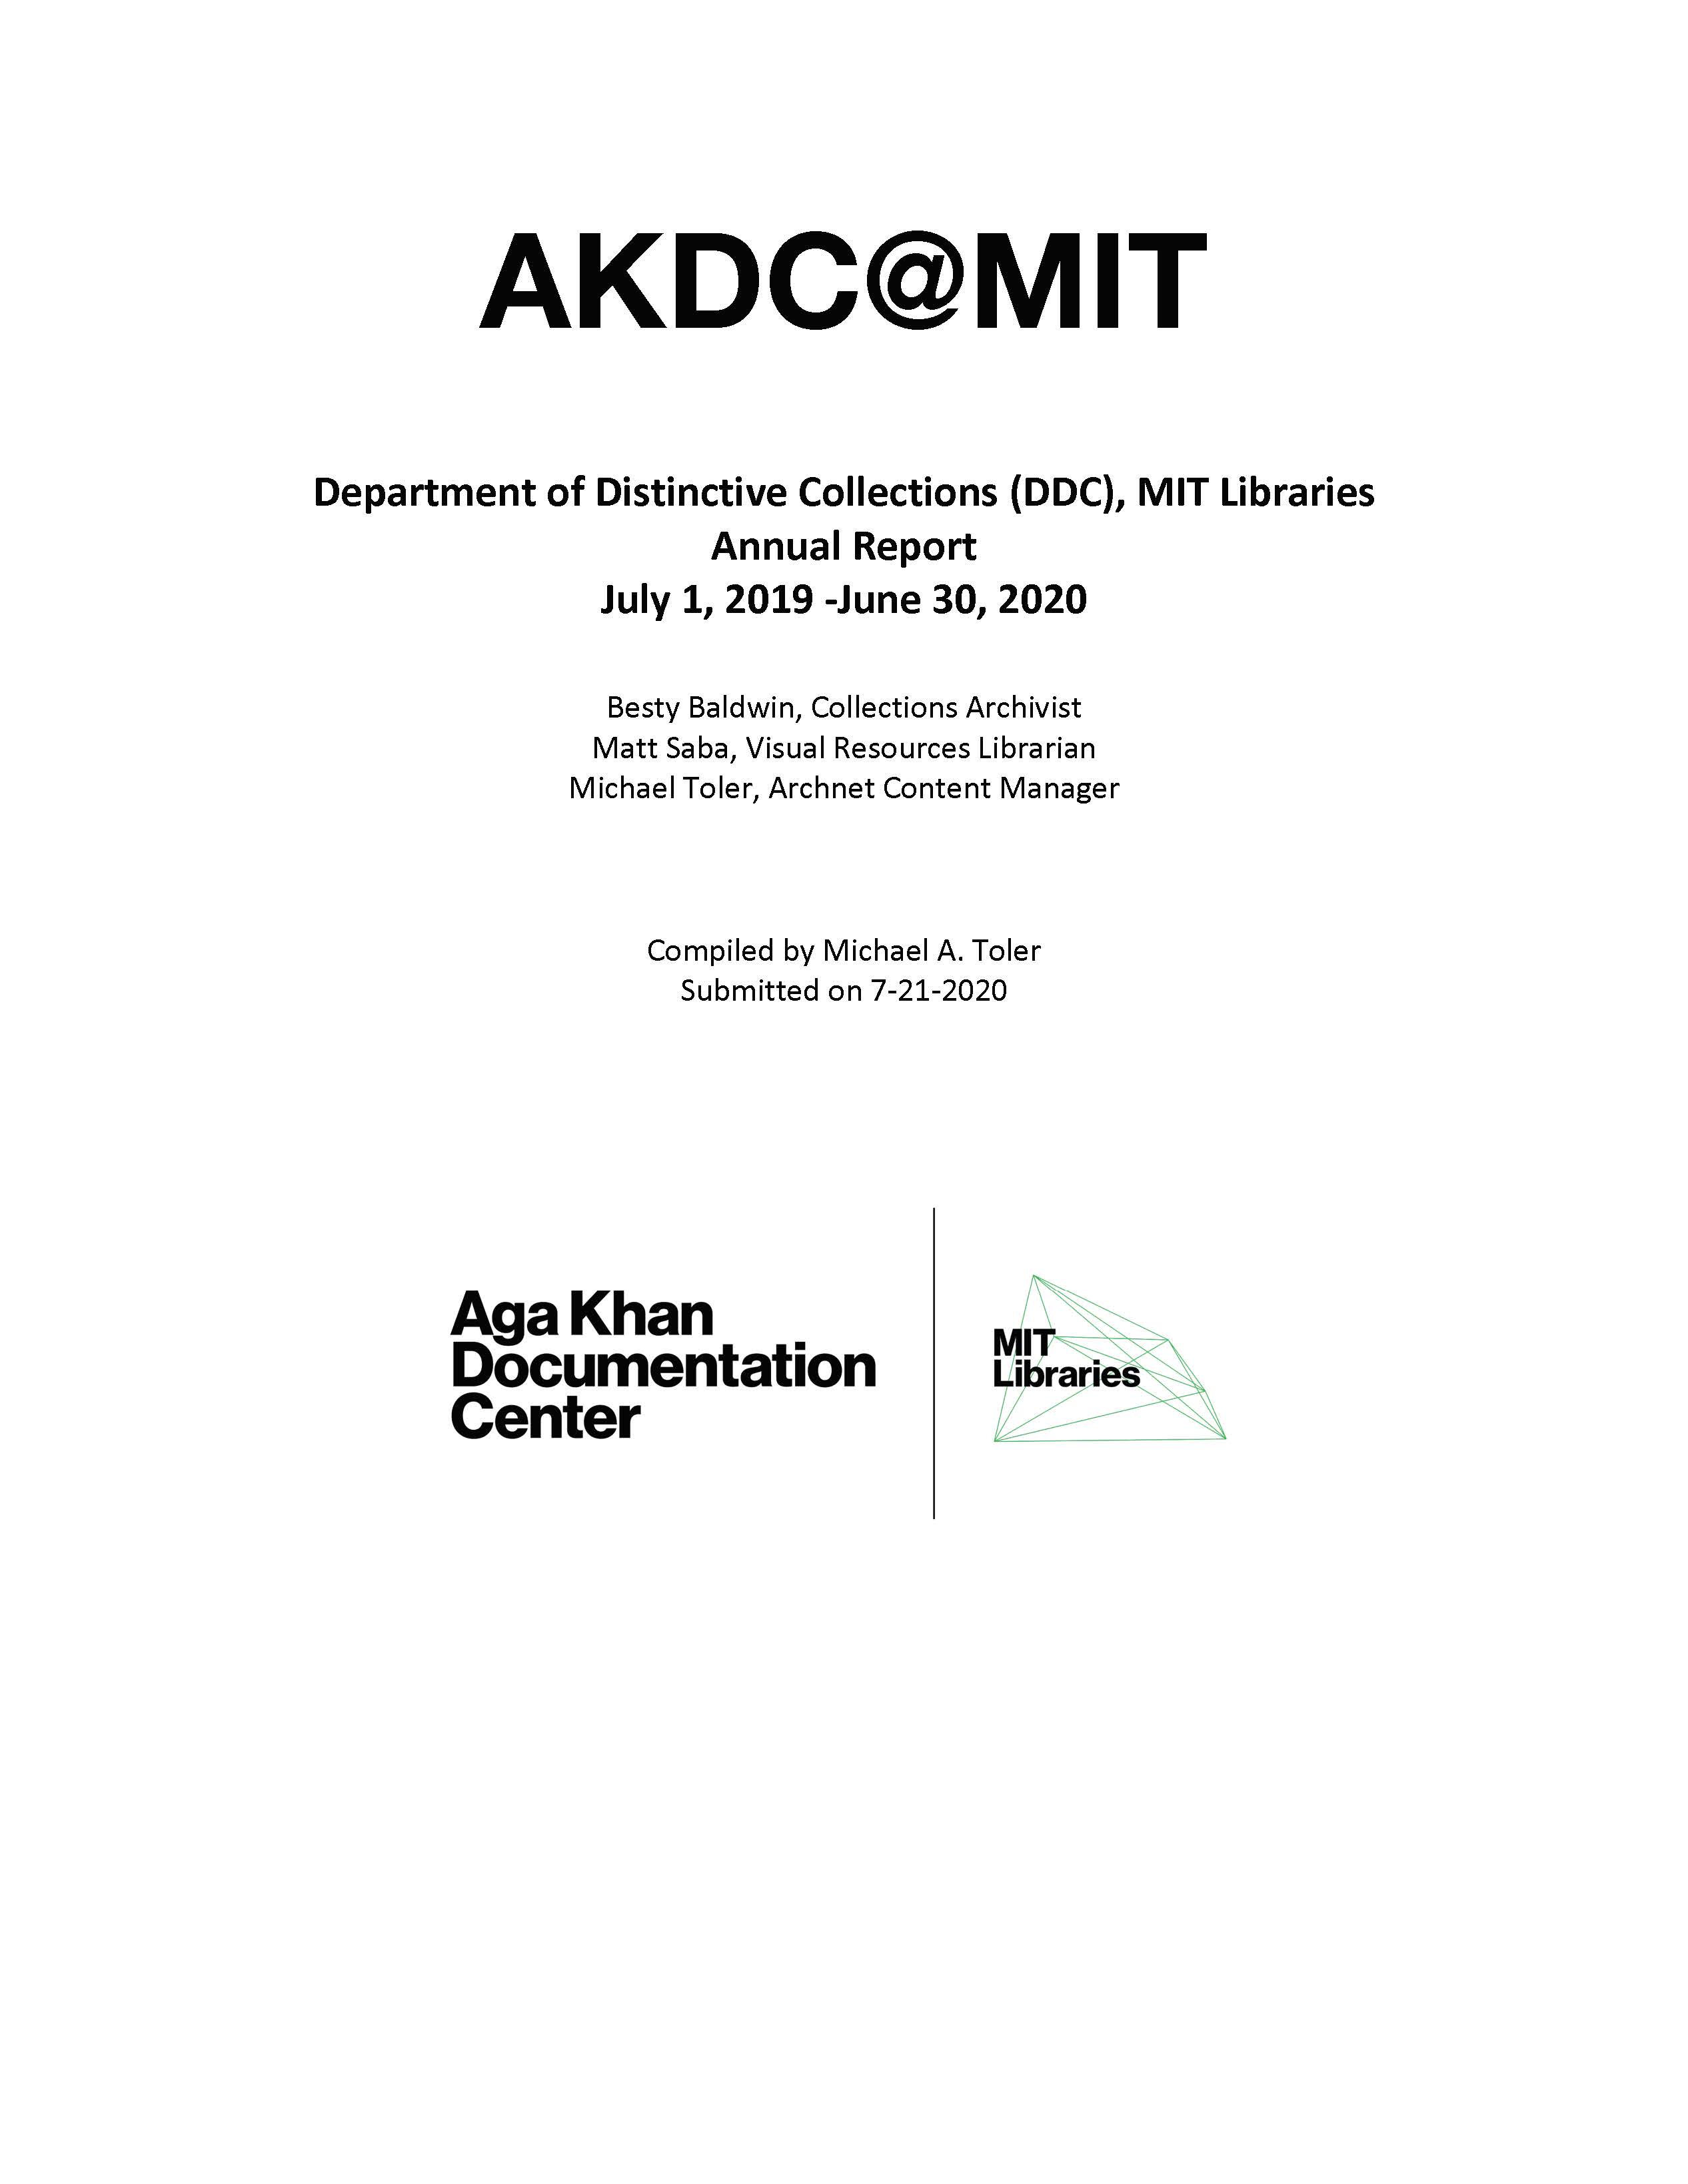 Aga Khan Documentation Center, MIT Libraries, FY2020